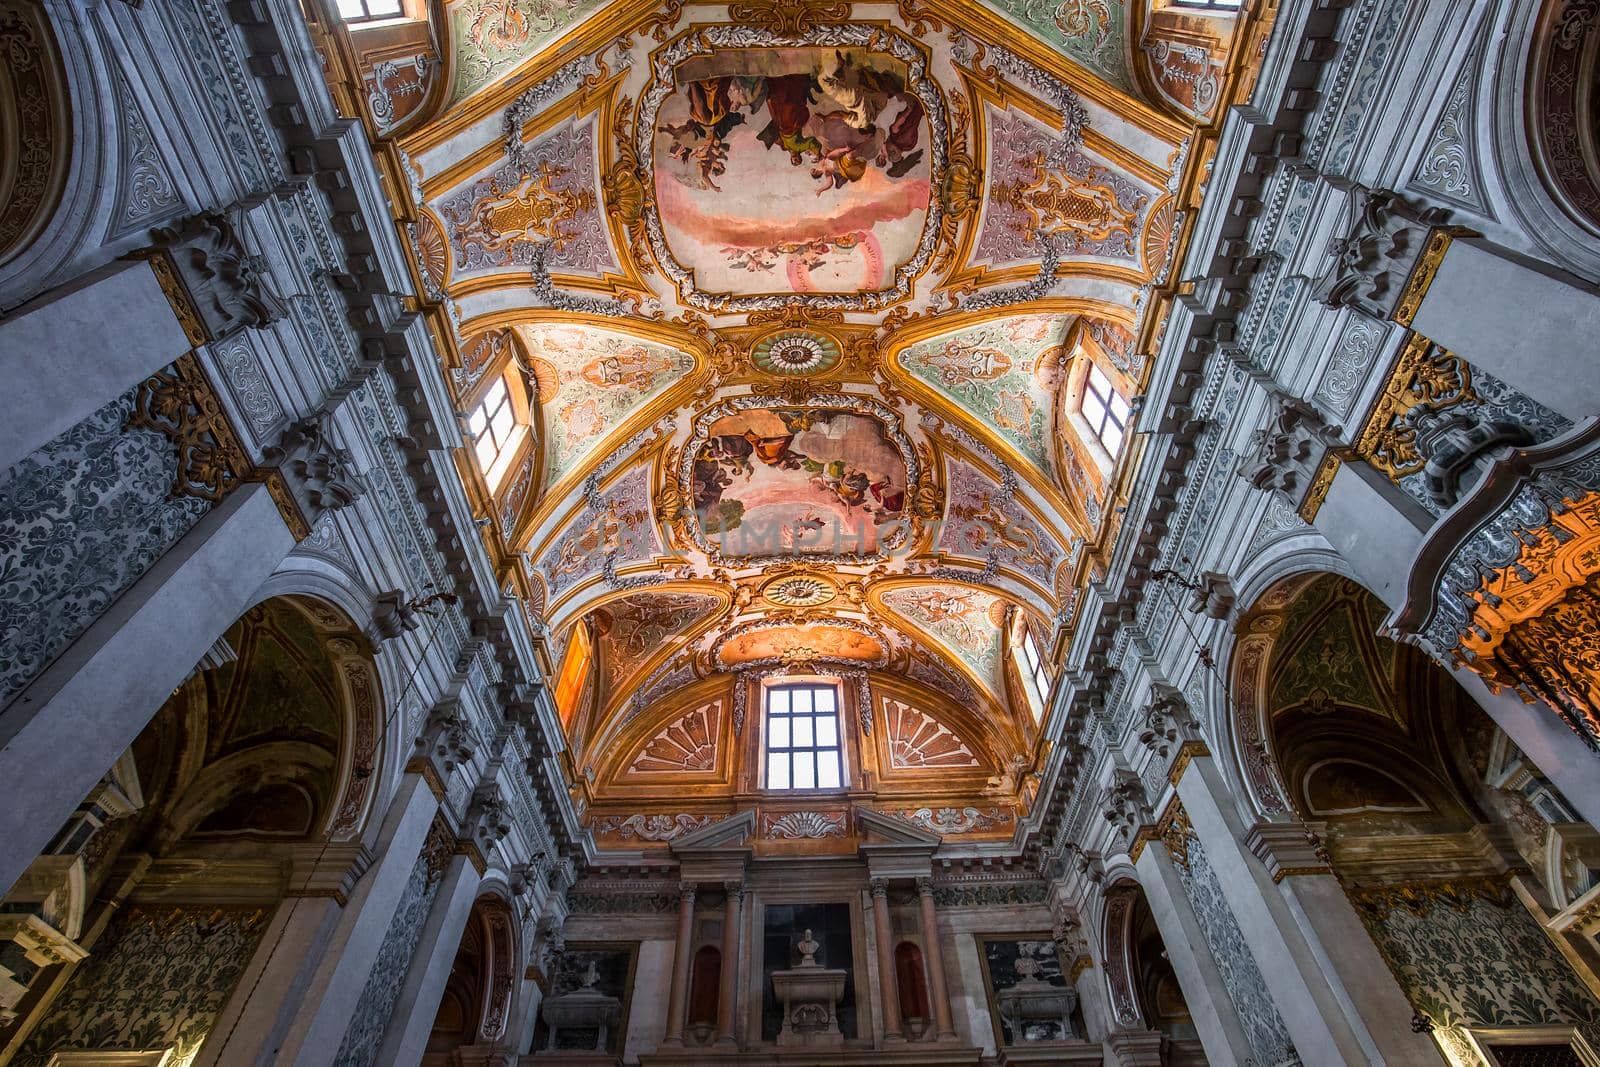 interiors of chiesa I Gesuiti, Venice, Italy by photogolfer